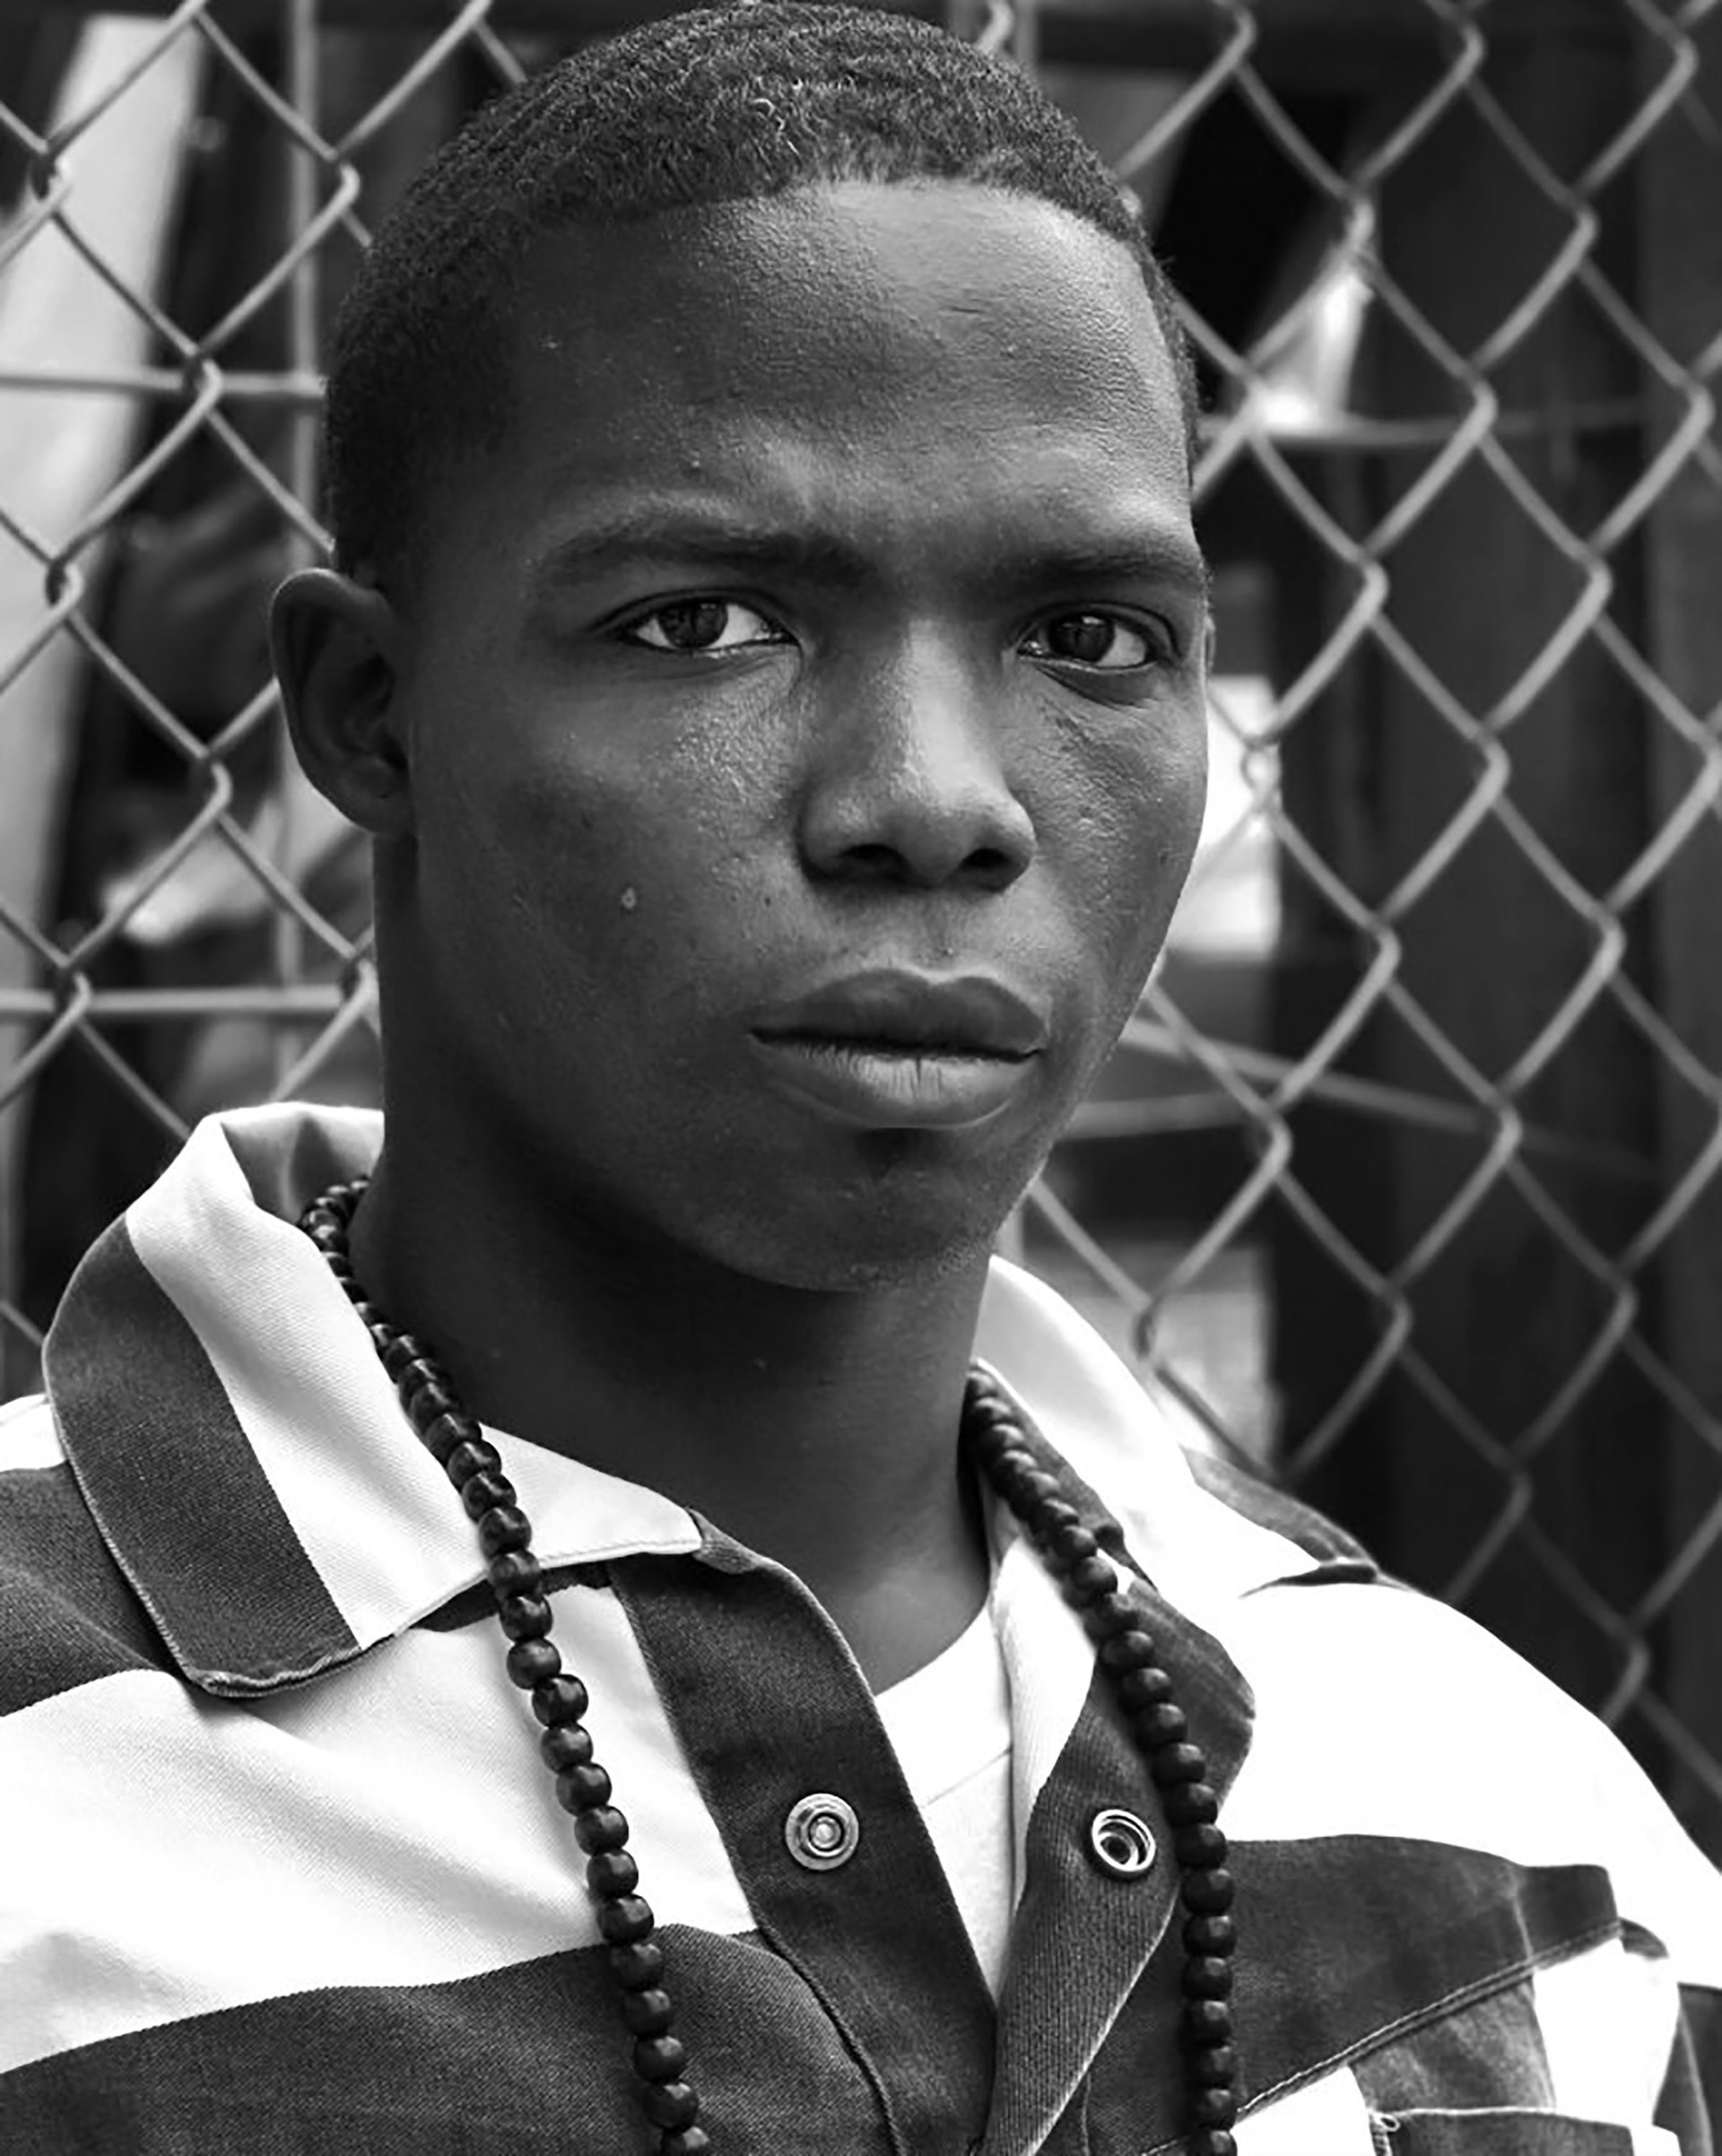 Chandra McCormick. YOUNG MAN, ANGOLA STATE PENITENTIARY, 2013.